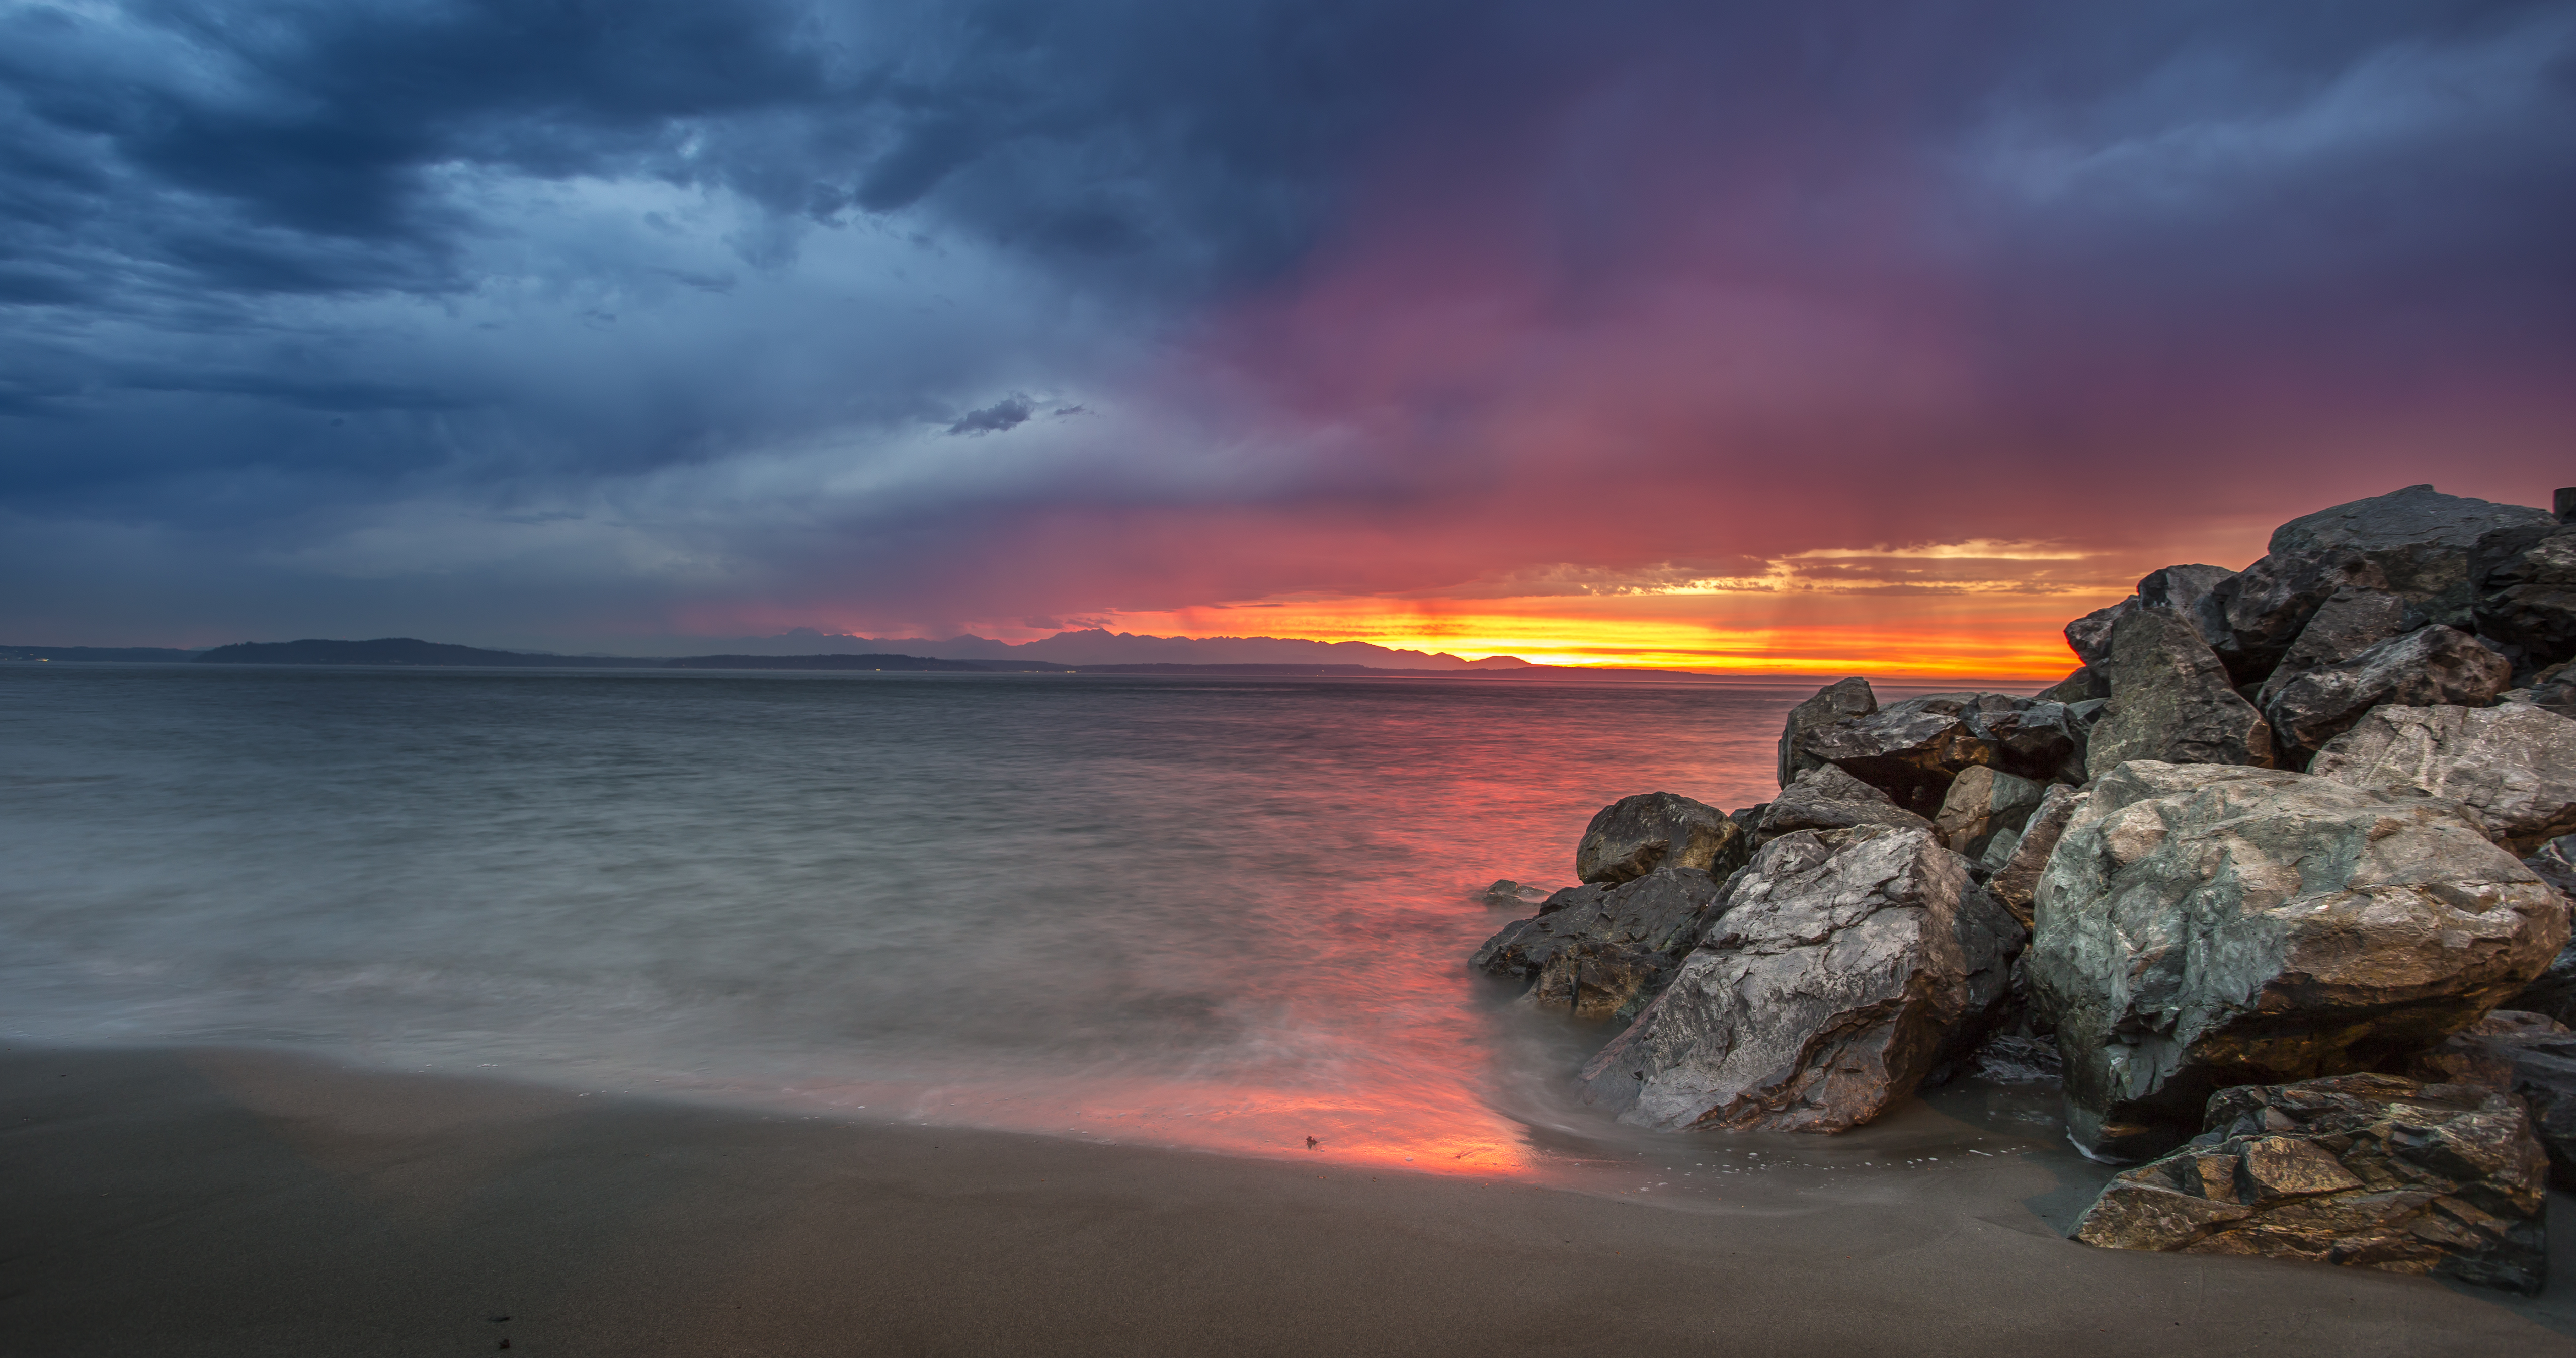 Beach Sunset  4k Ultra HD Wallpaper Background Image 